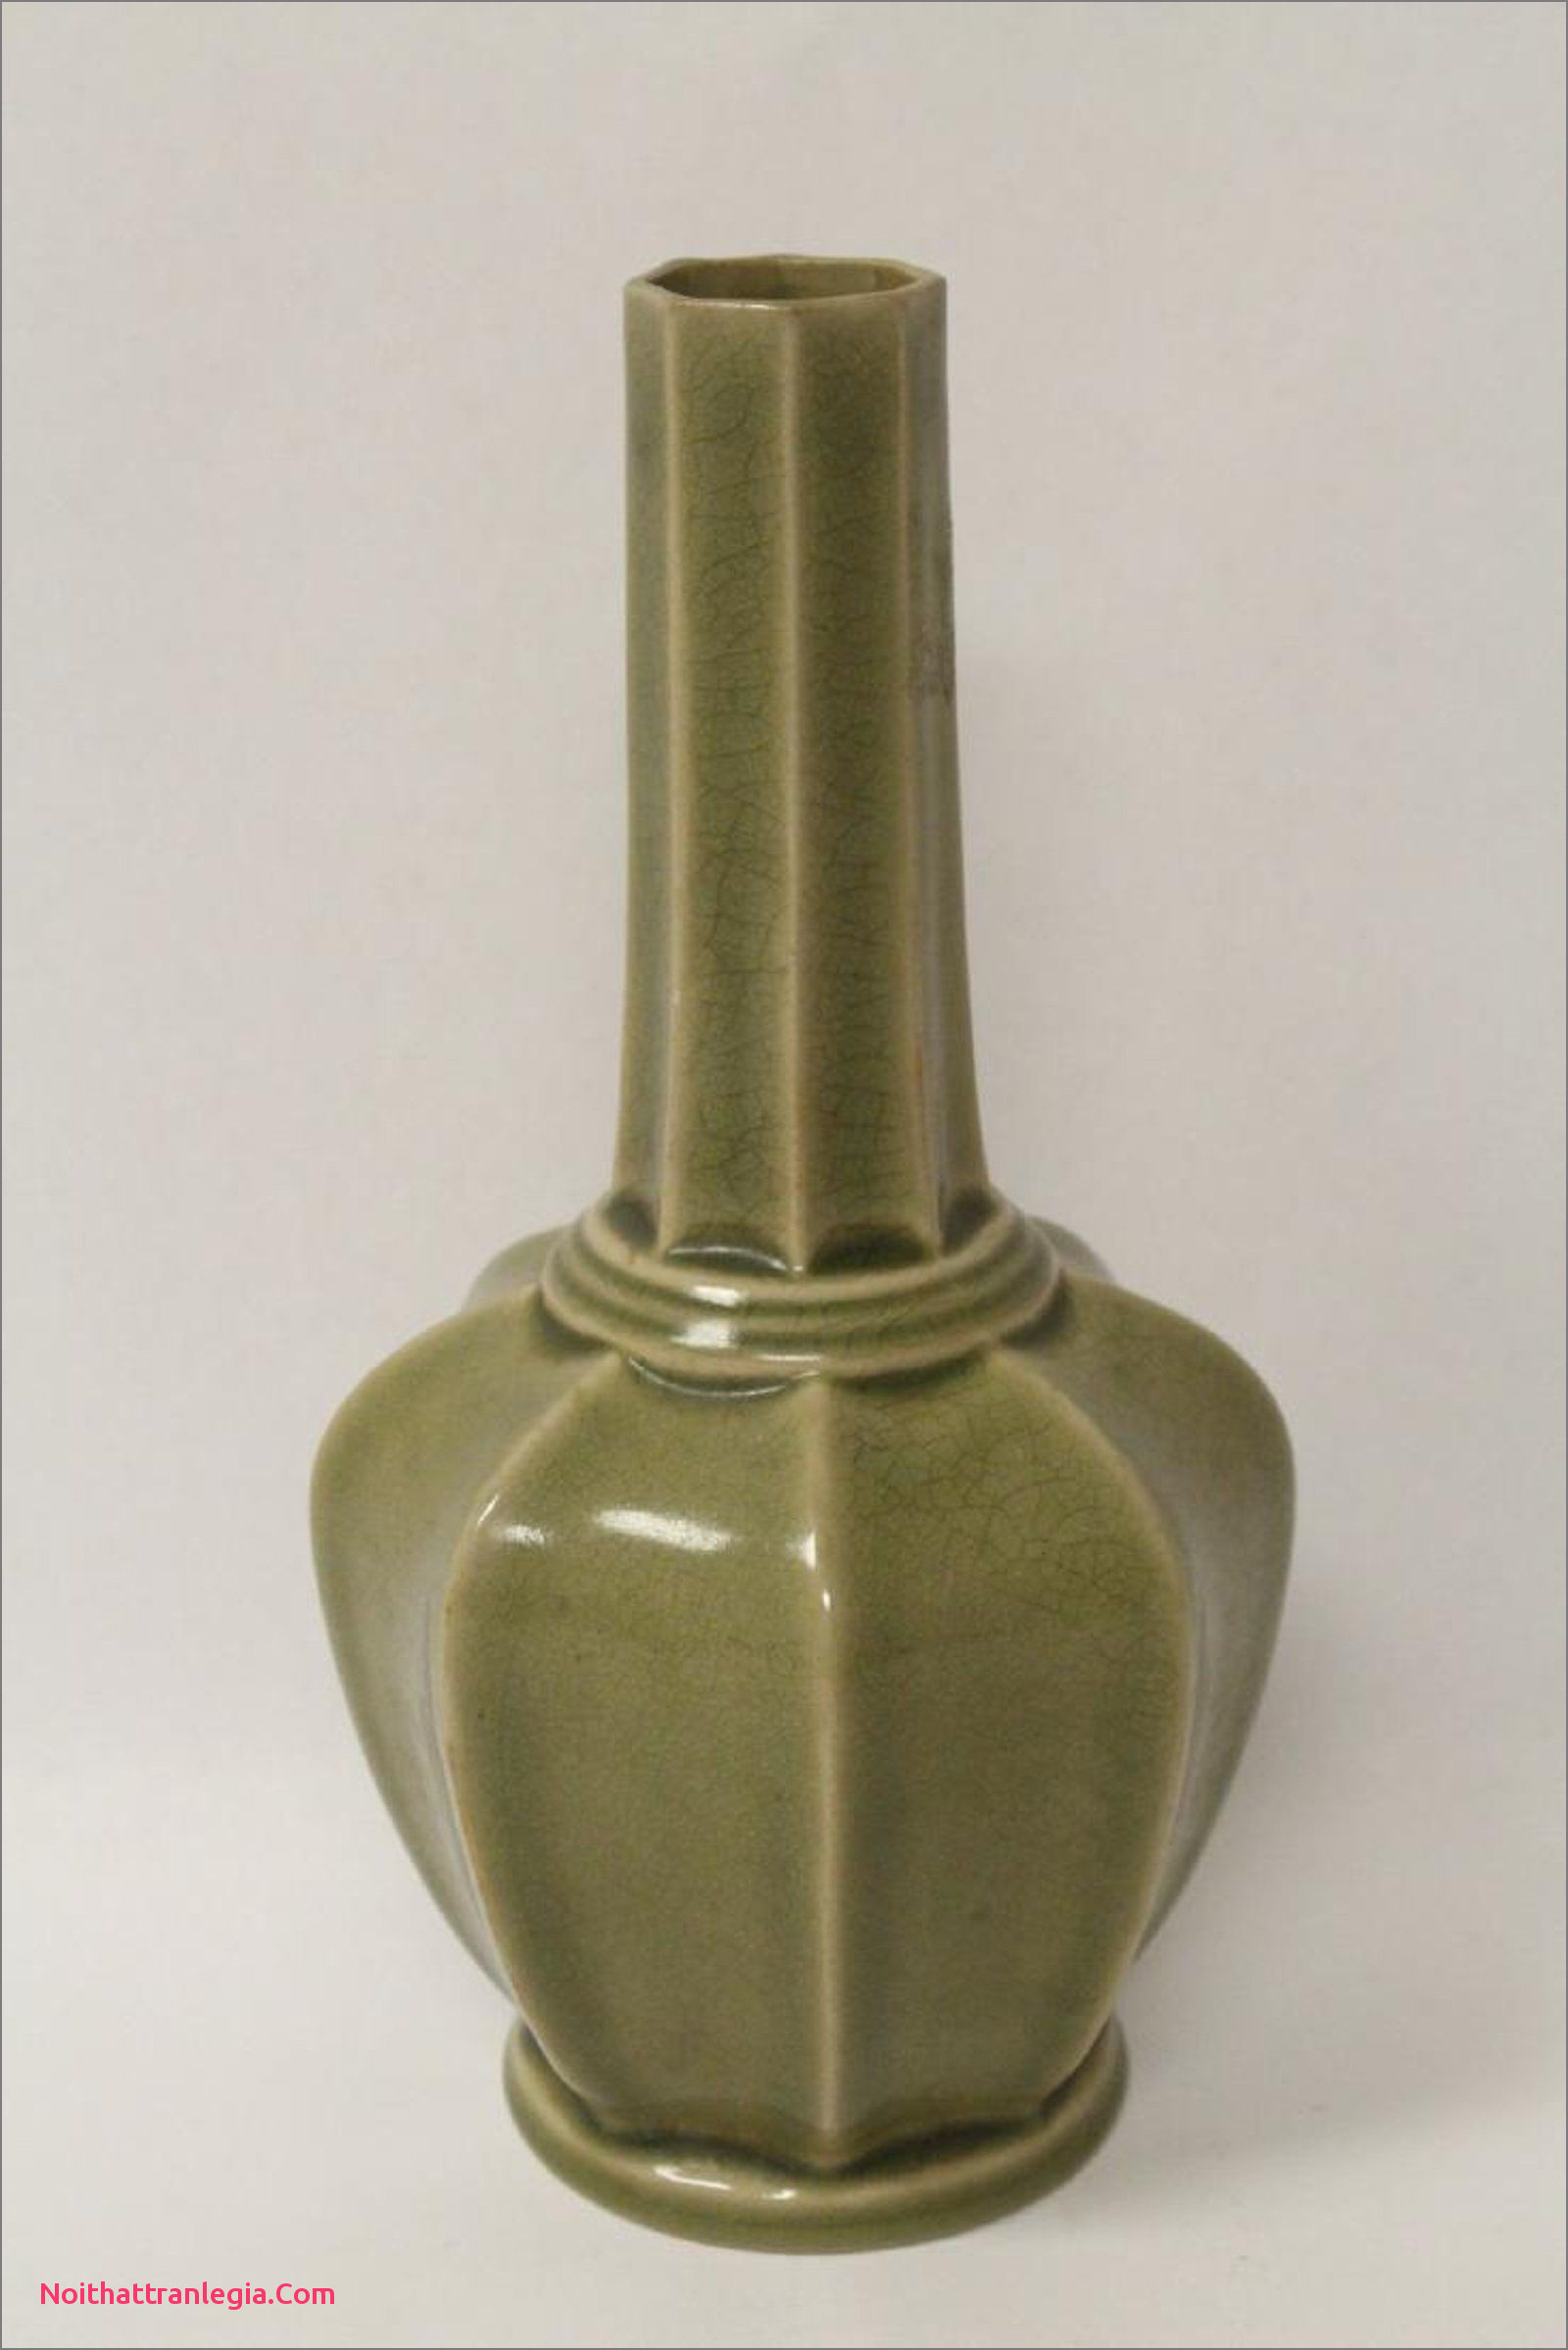 27 Spectacular Fine China Vase 2024 free download fine china vase of 20 chinese antique vase noithattranlegia vases design within chinese song style celadon porcelain vase